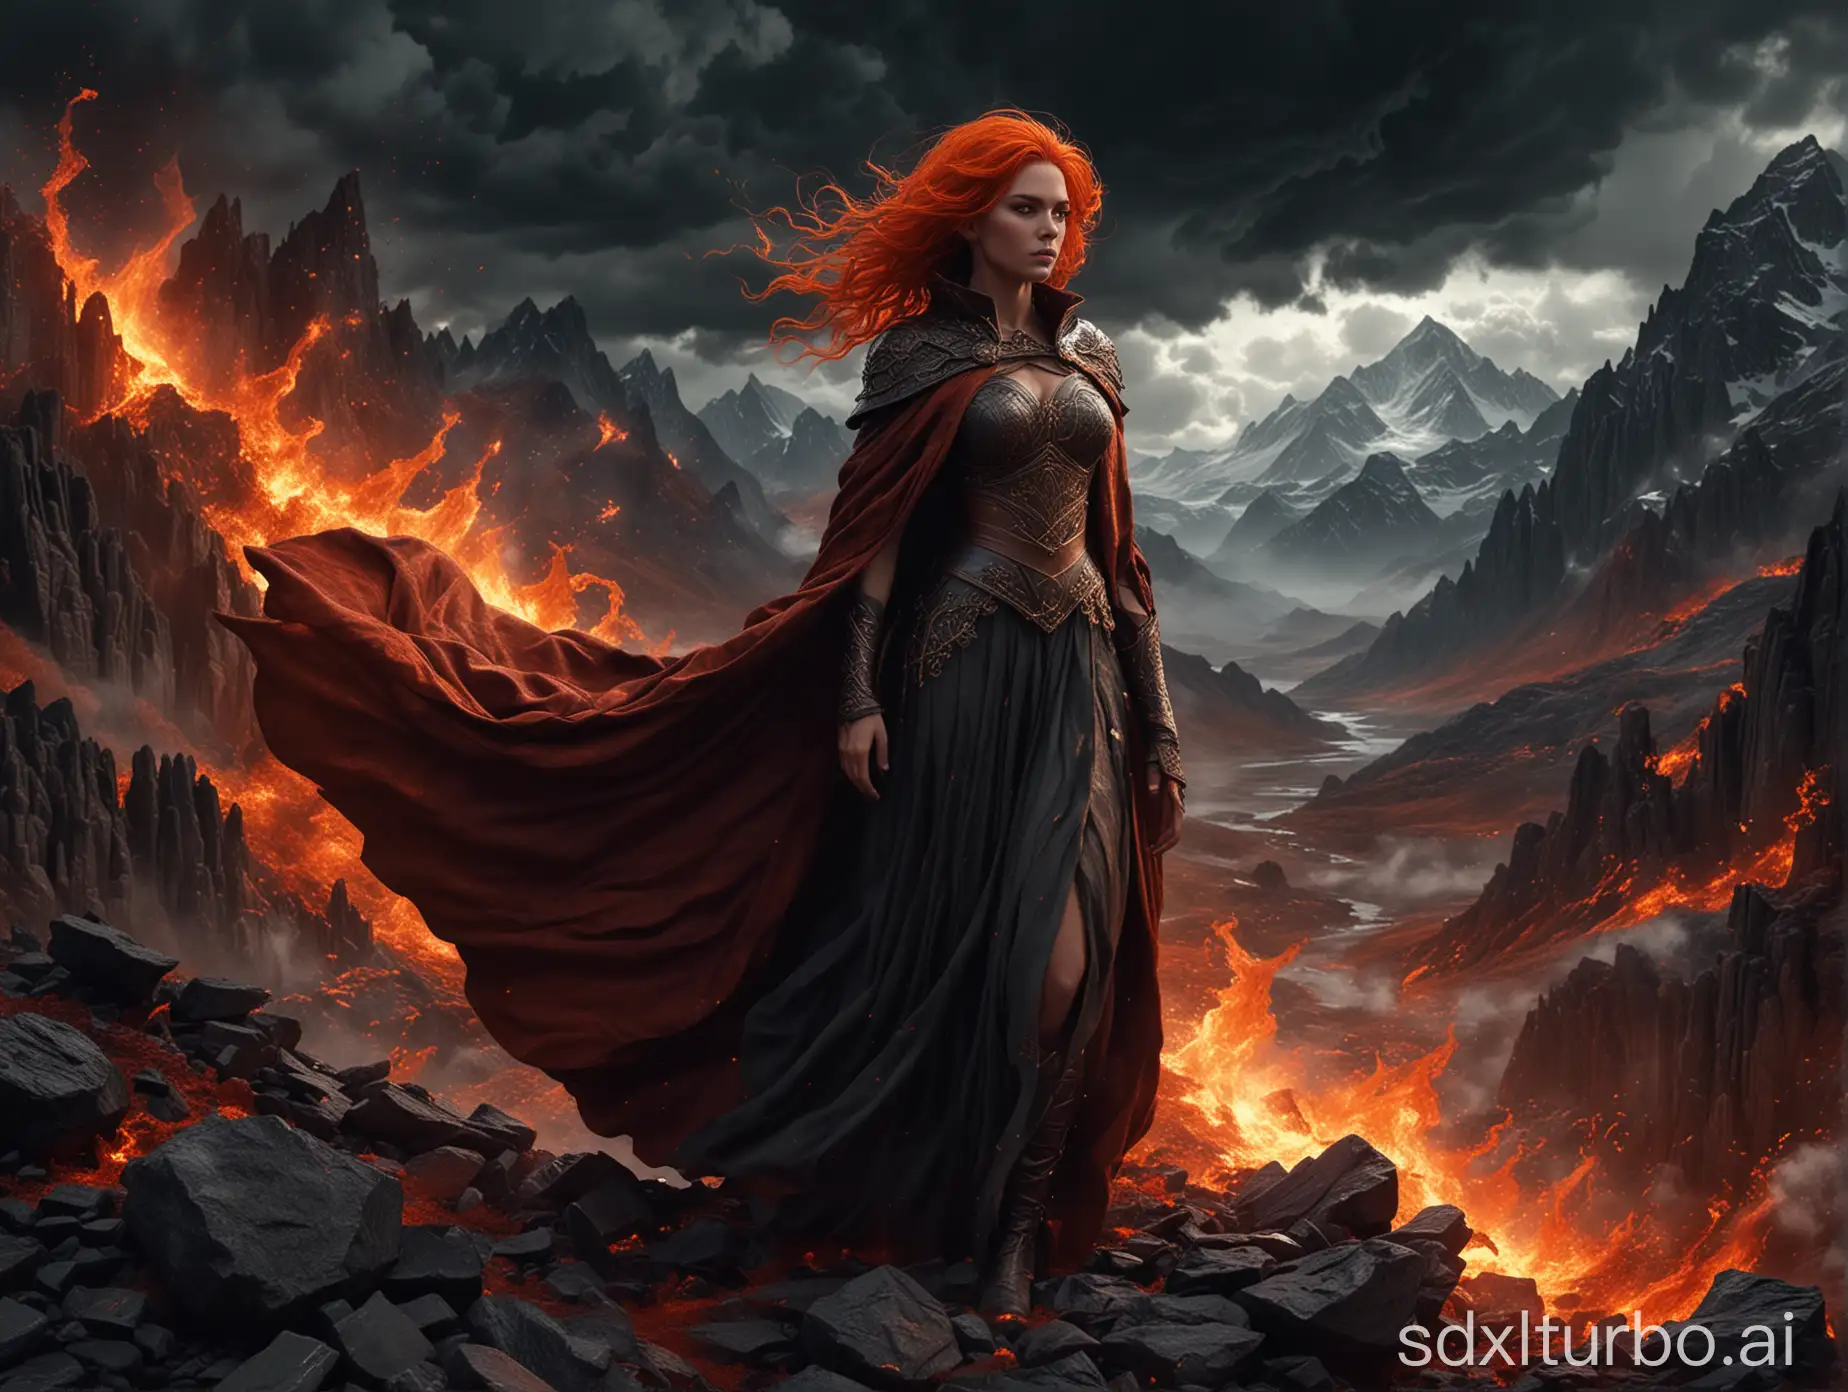 Mysterious-Woman-Enveloped-in-Fiery-Elements